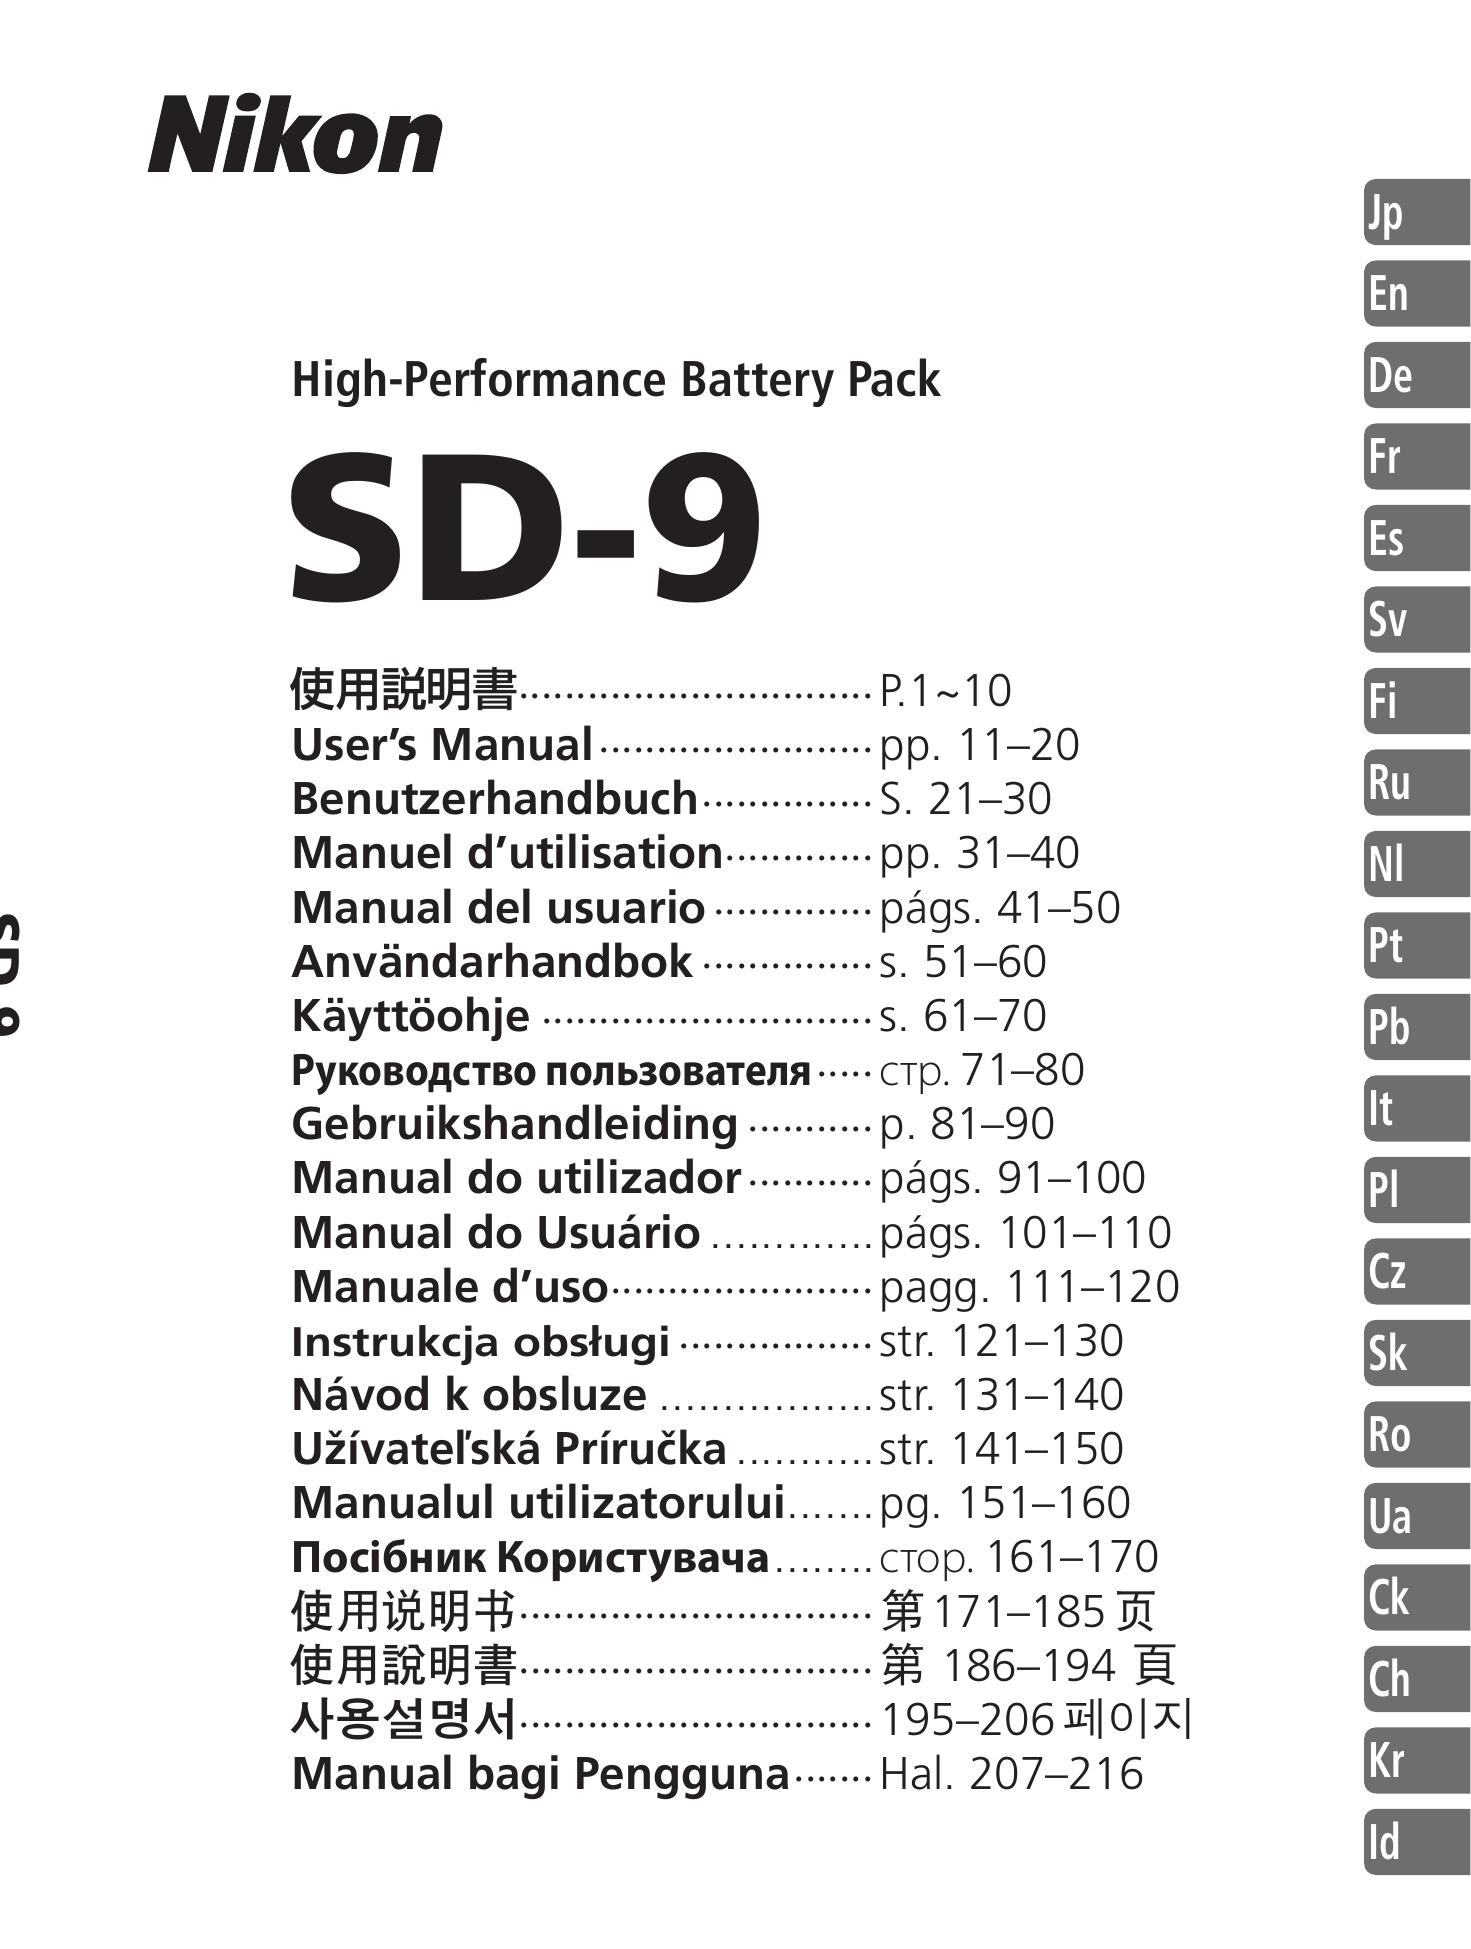 Nikon SD-9 Marine Battery User Manual